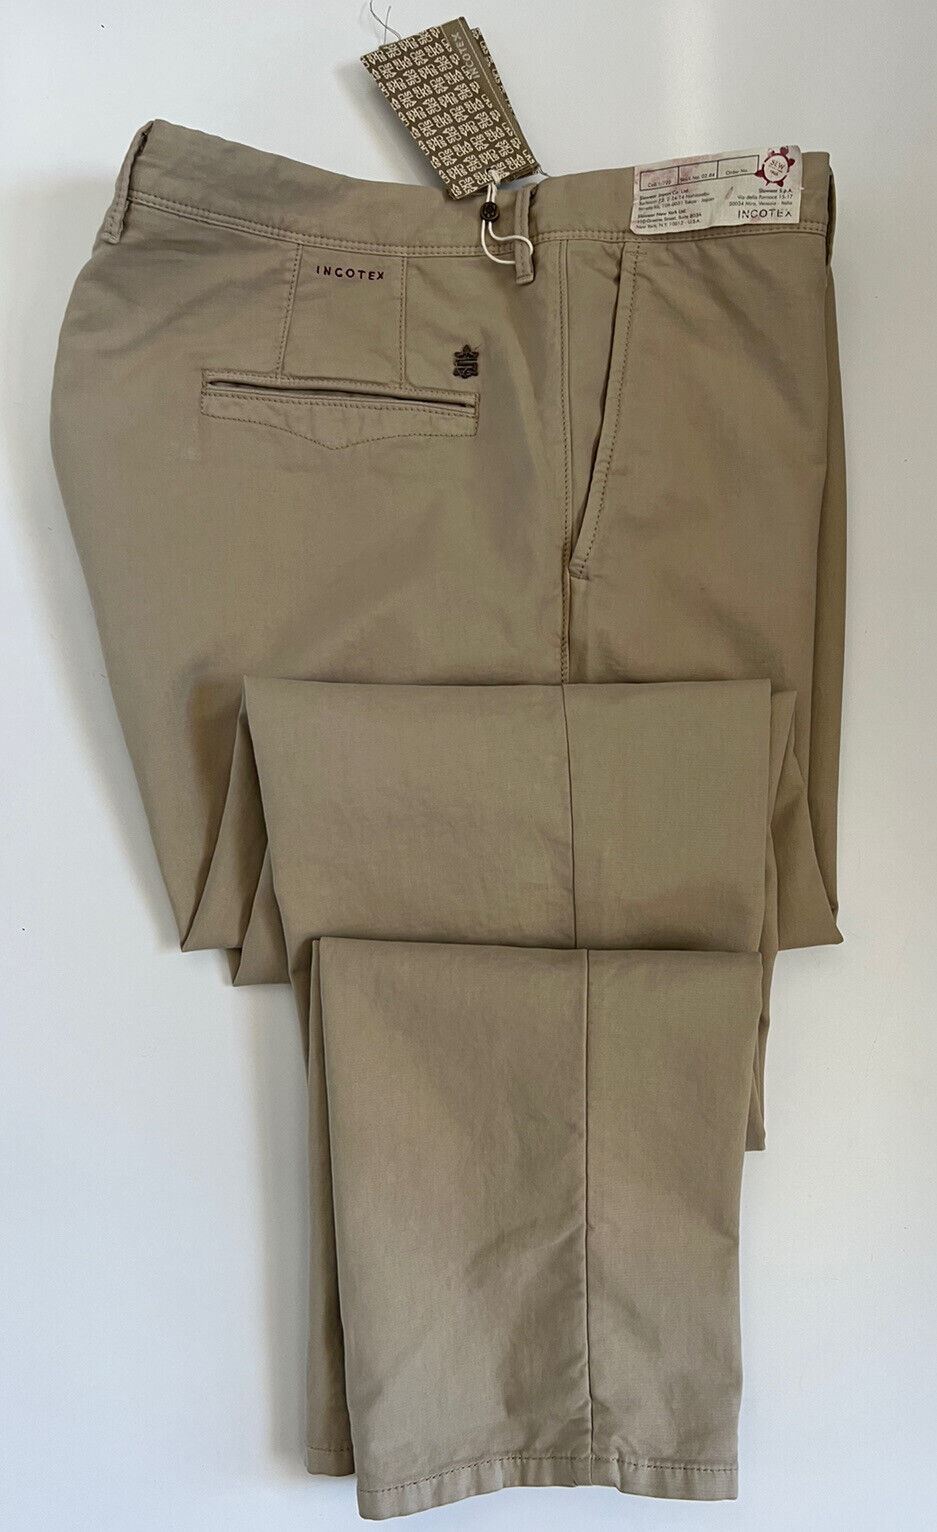 NWT 495 долларов США Incotex Мужские брюки узкого кроя бежевого цвета, размер 42 США